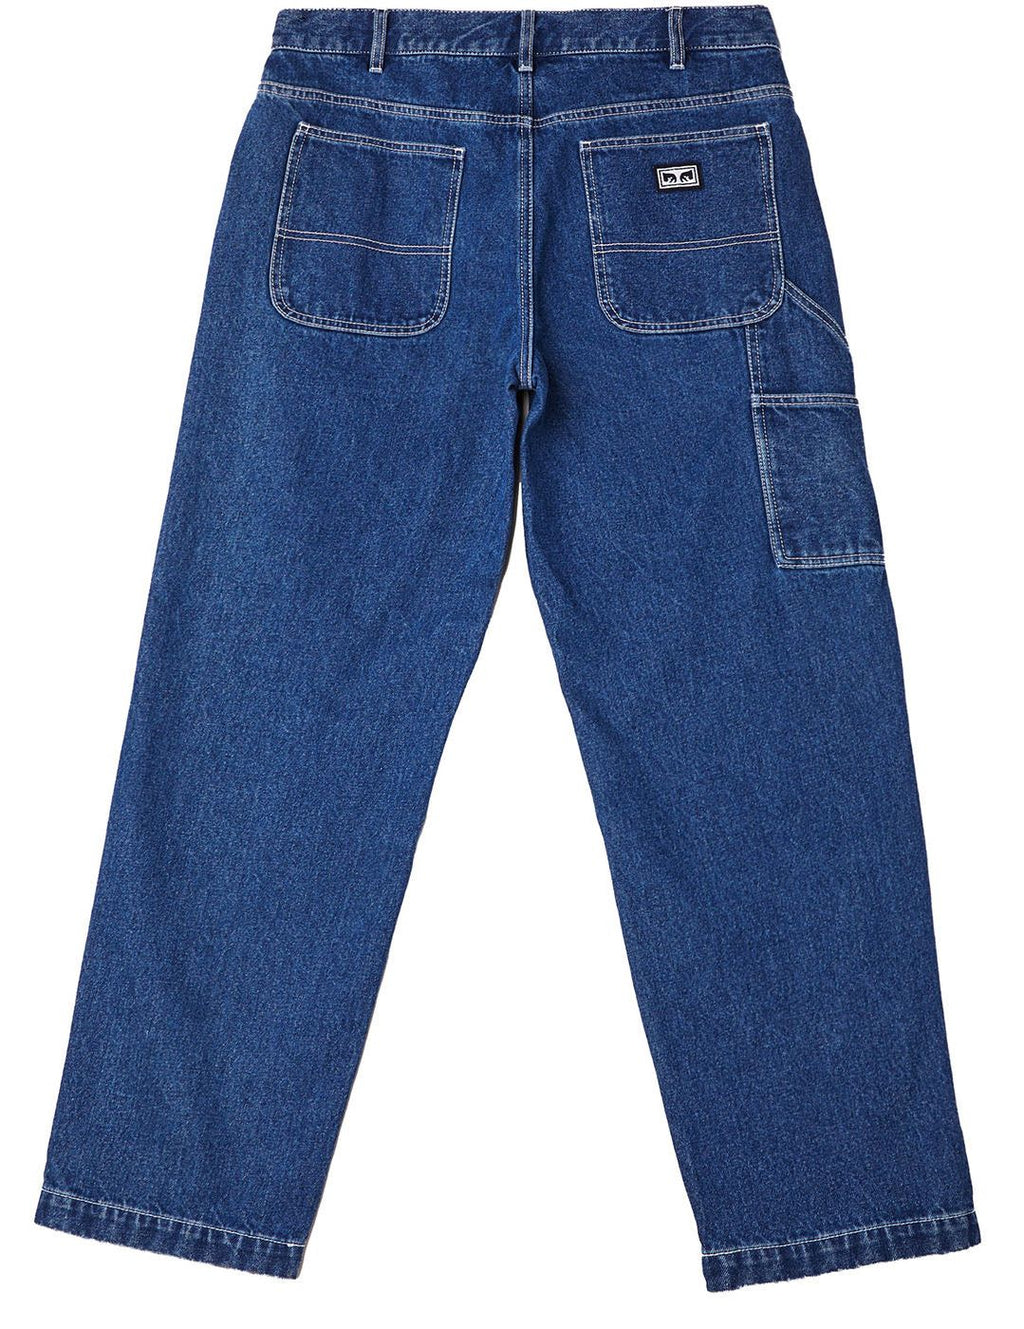  Obey Jeans Hardwork Carpenter Denim Pant Stonewash Indigo Blue Uomo - 1